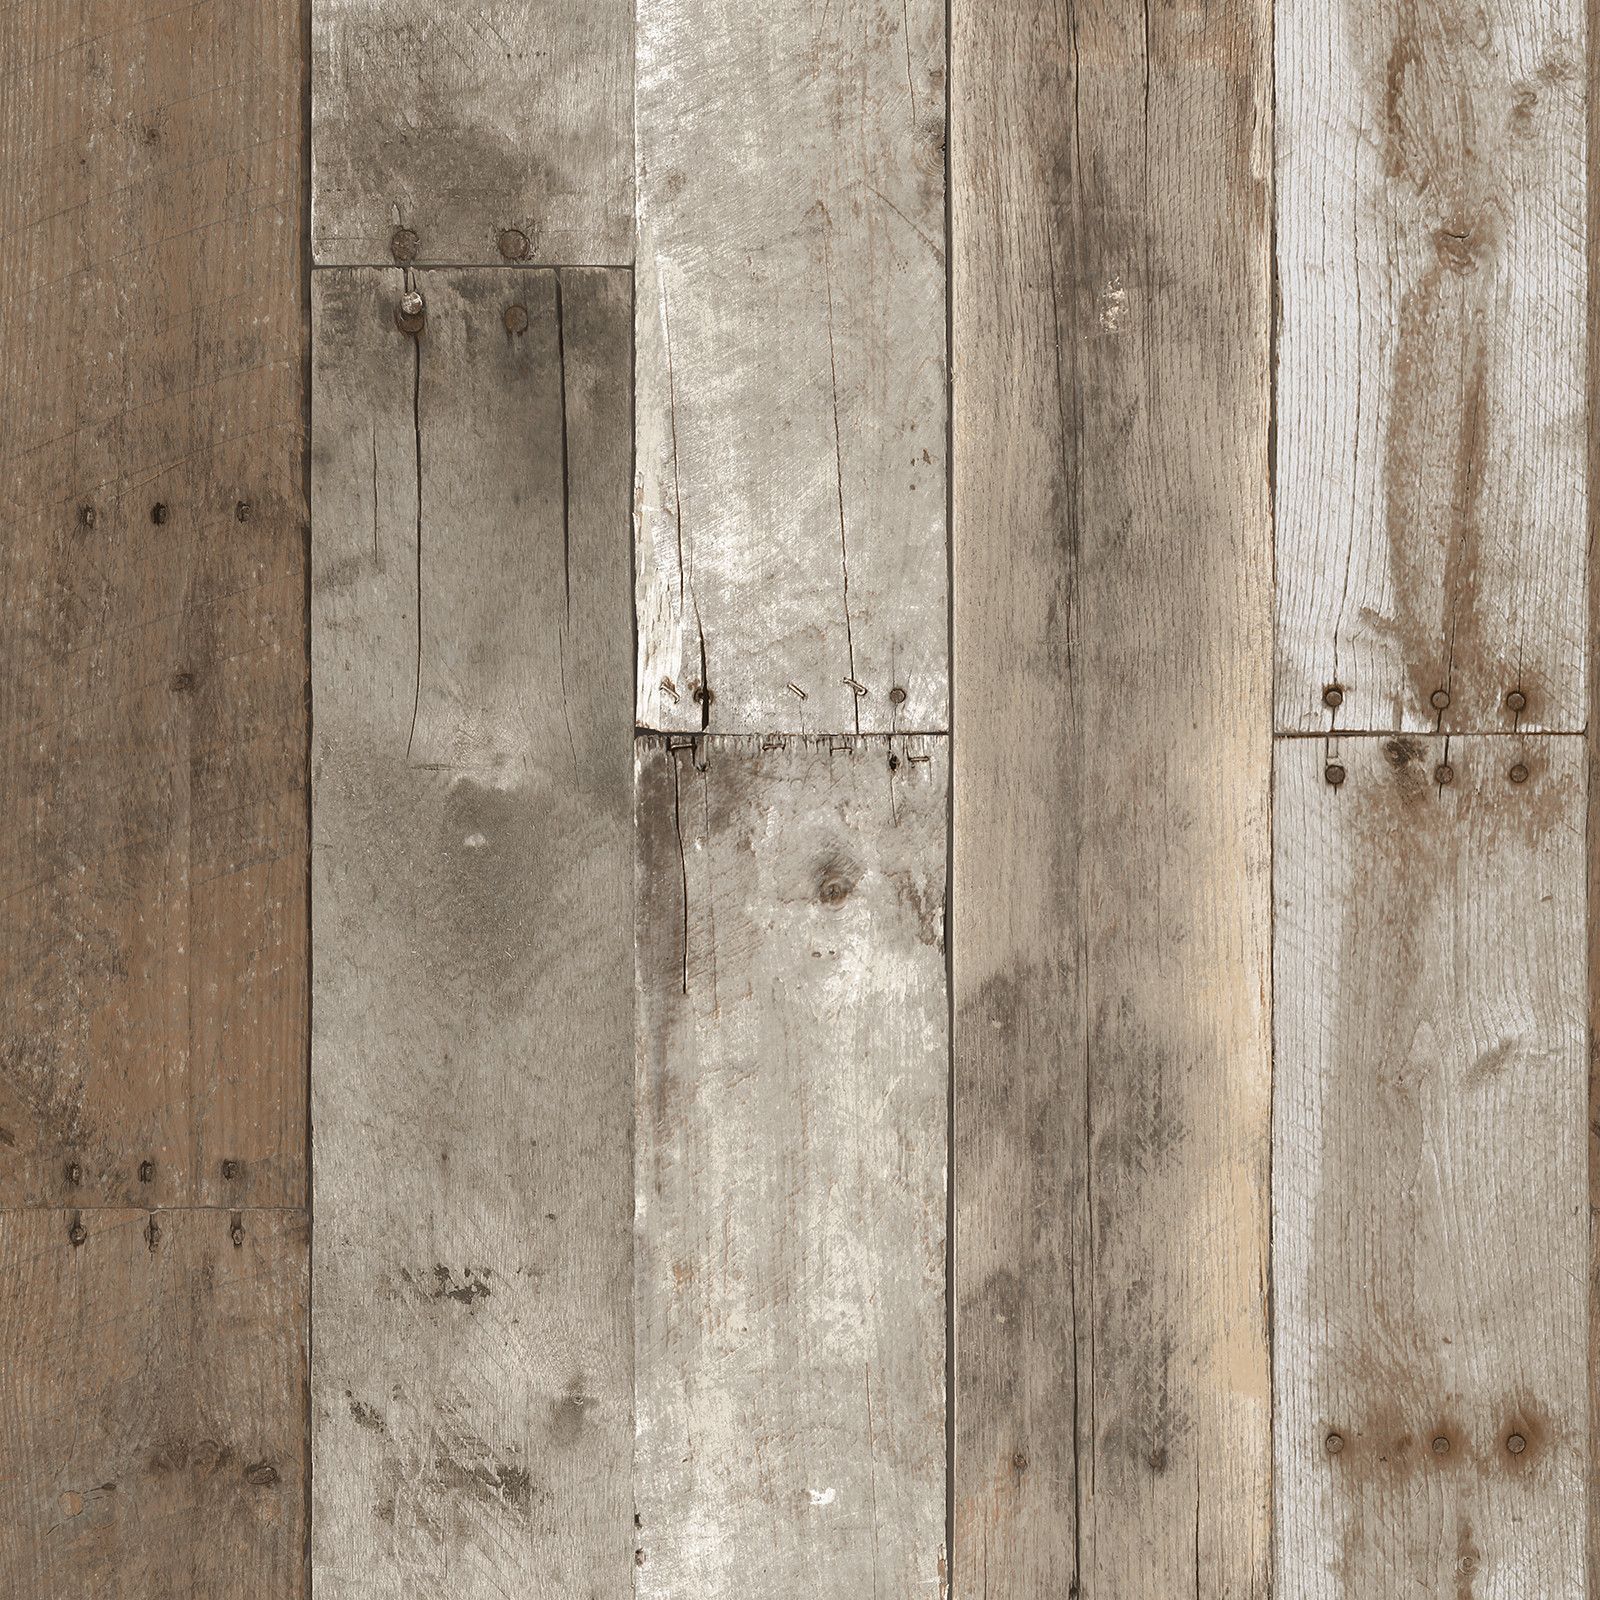 Repurposed Wood Weathered Textured Self Adhesive Wallpaper by ...